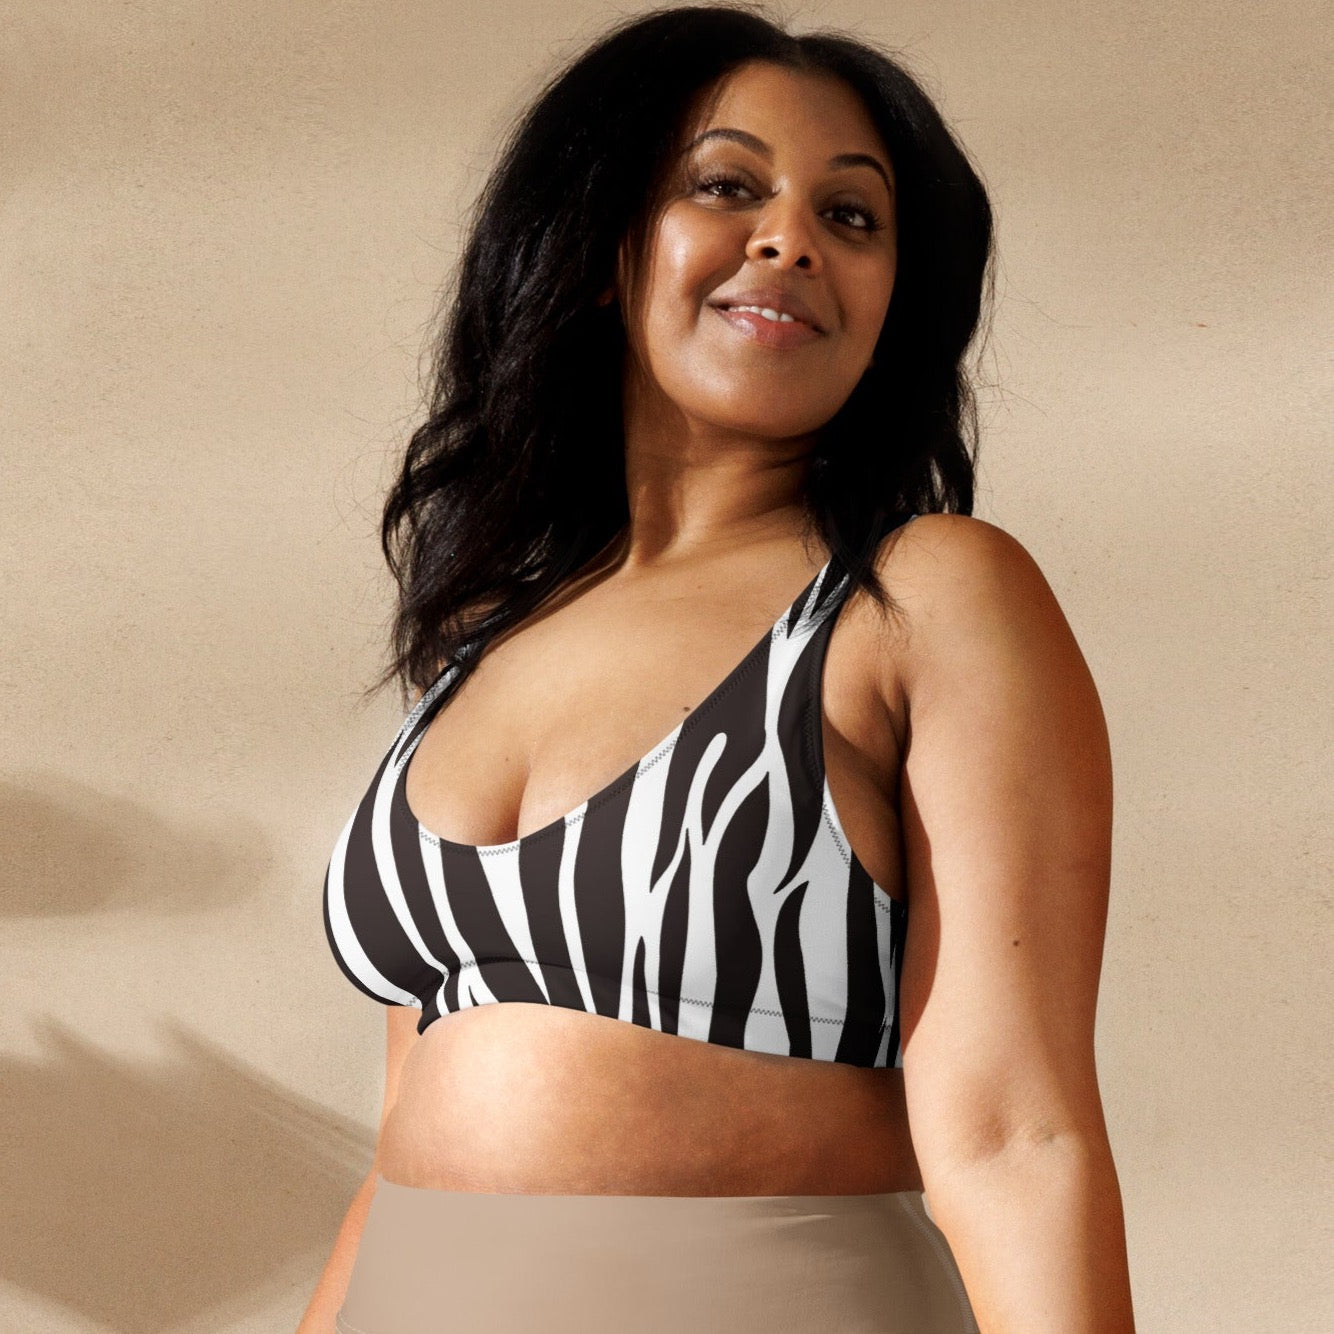 Eye-catching zebra print bikini top for beach looks